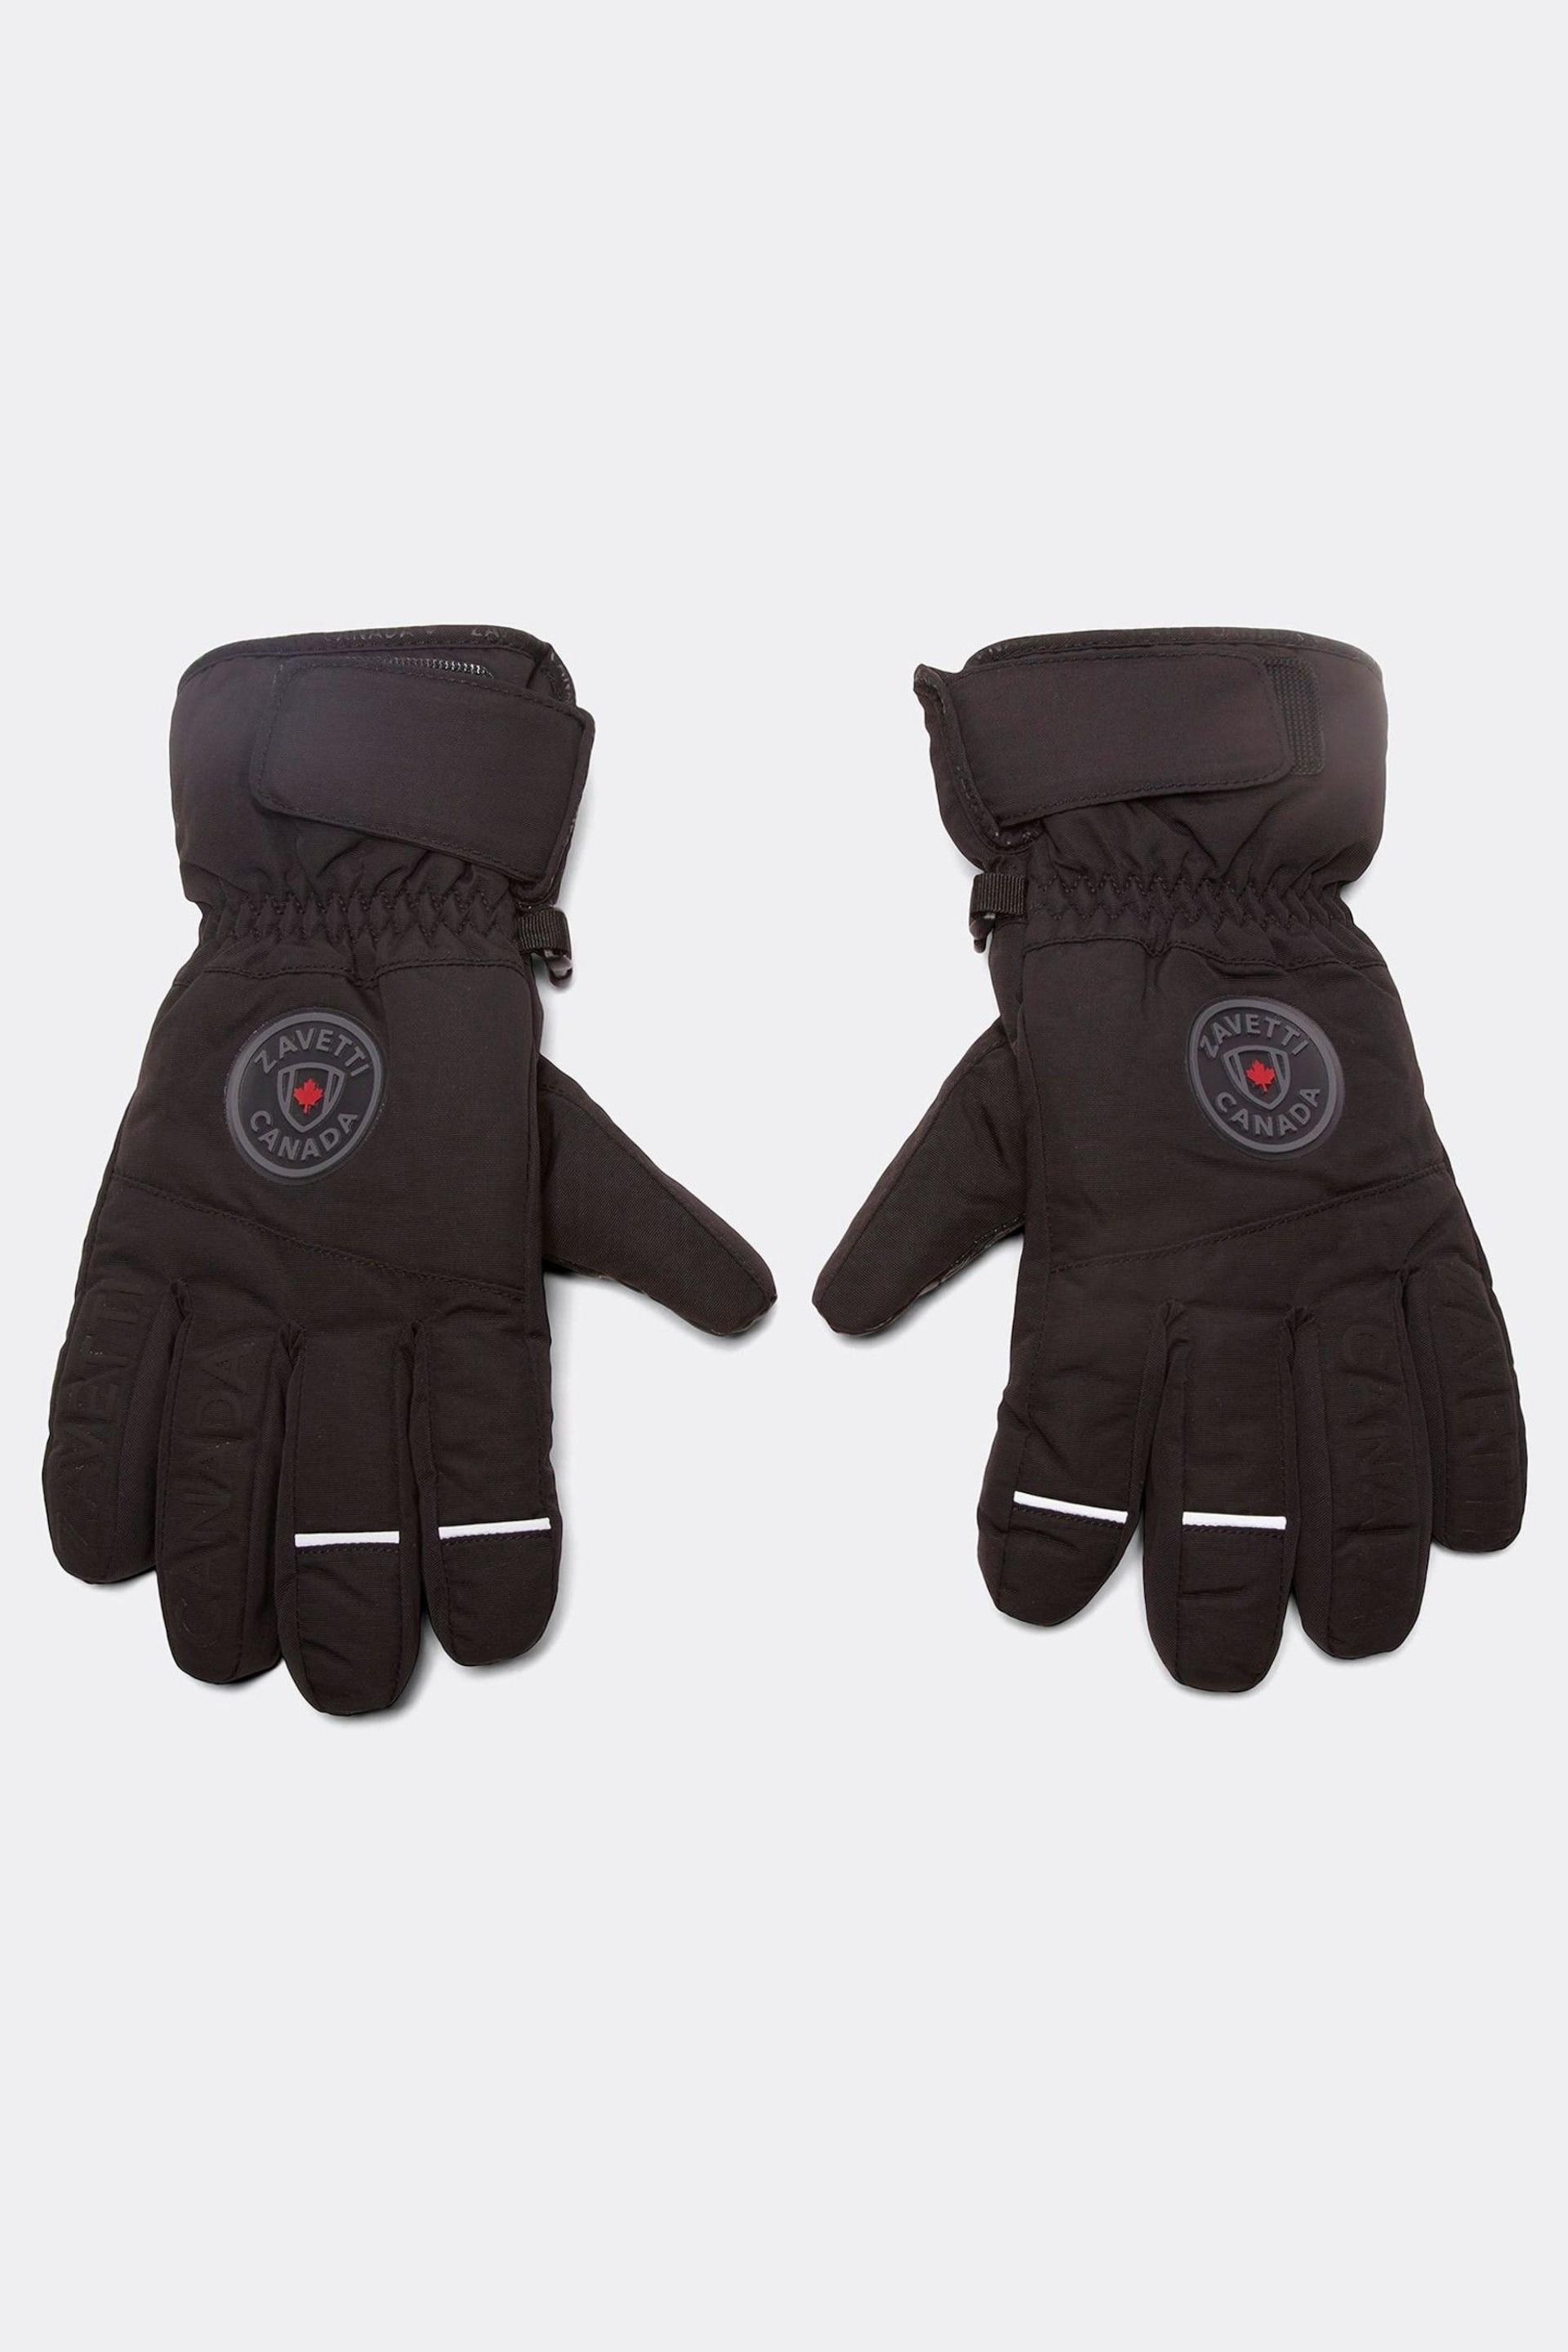 Zavetti Canada Black Acari Gloves - Image 1 of 5